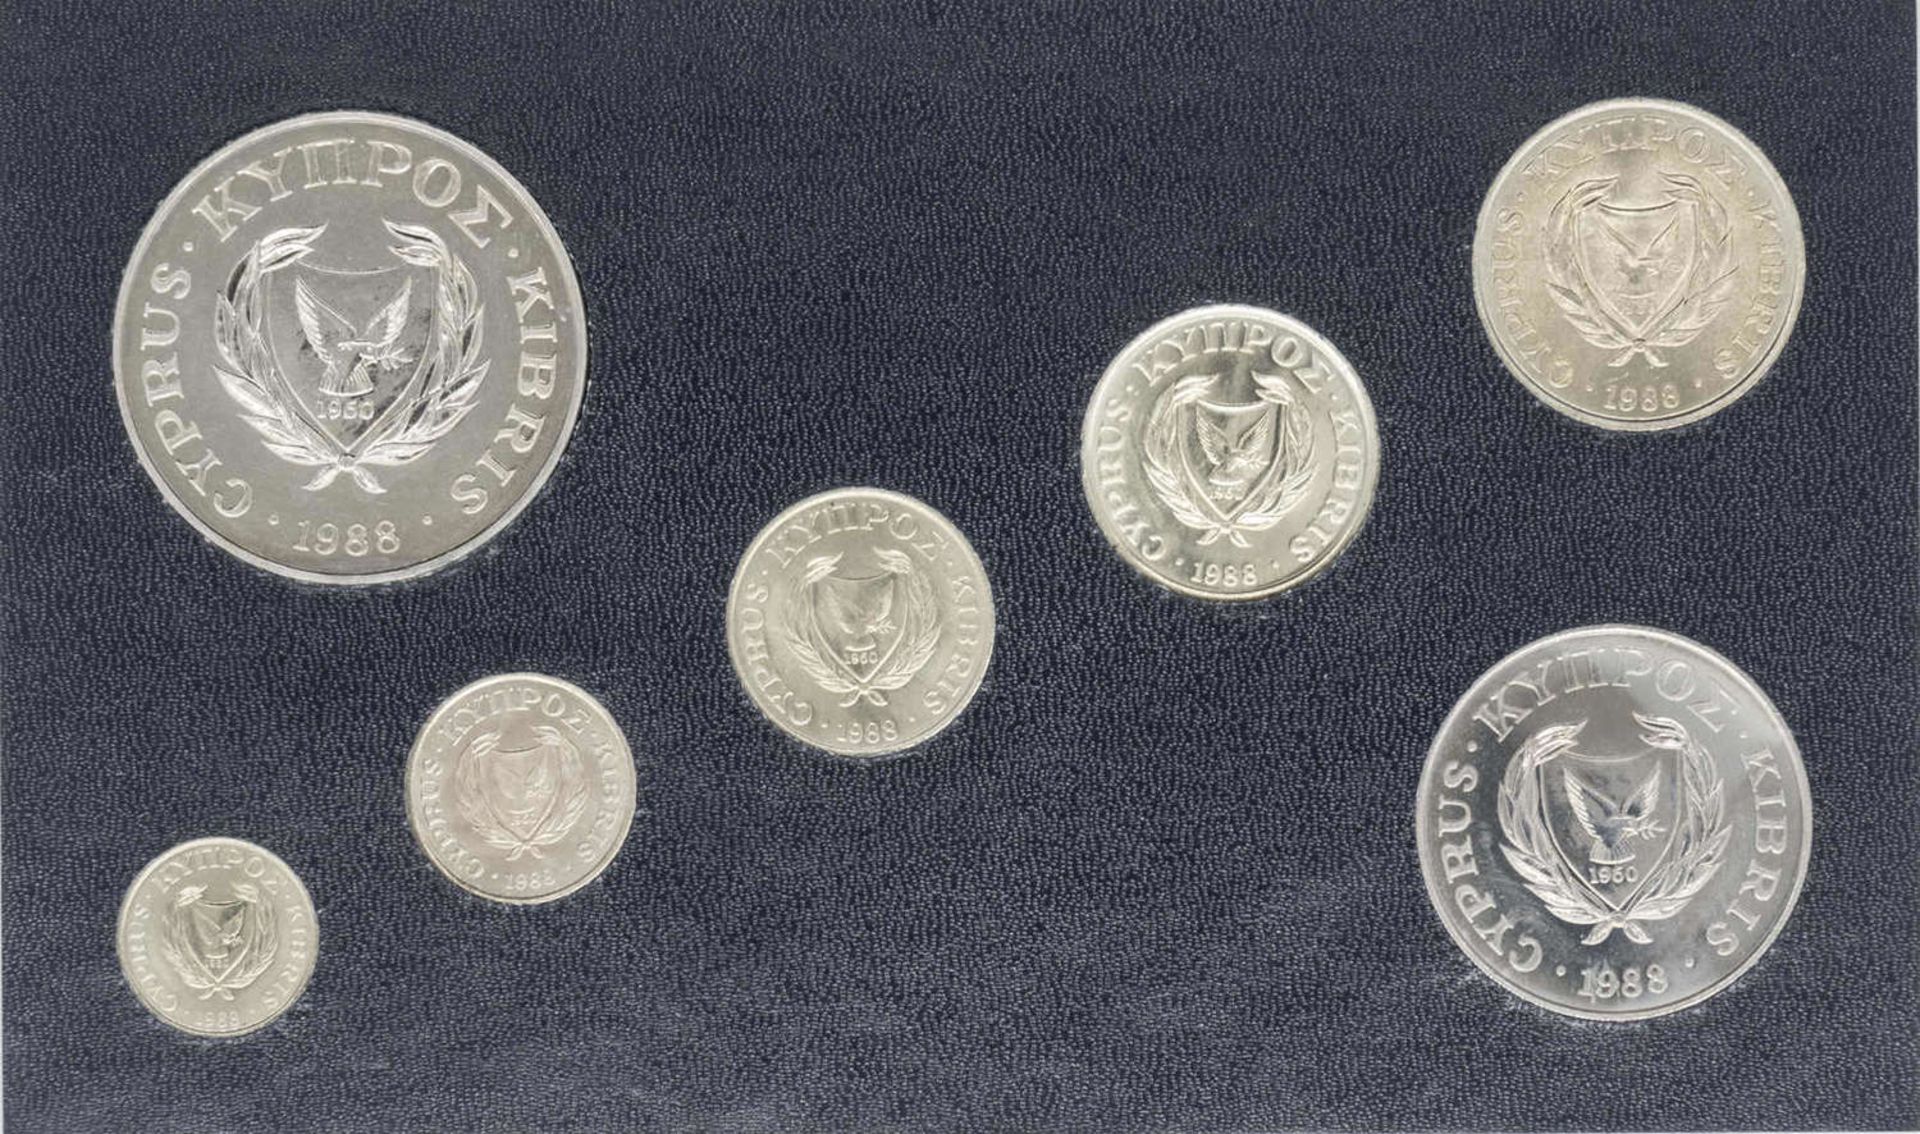 Cyprus 1988 course coin set, uncirculated. BU. - Bild 2 aus 2